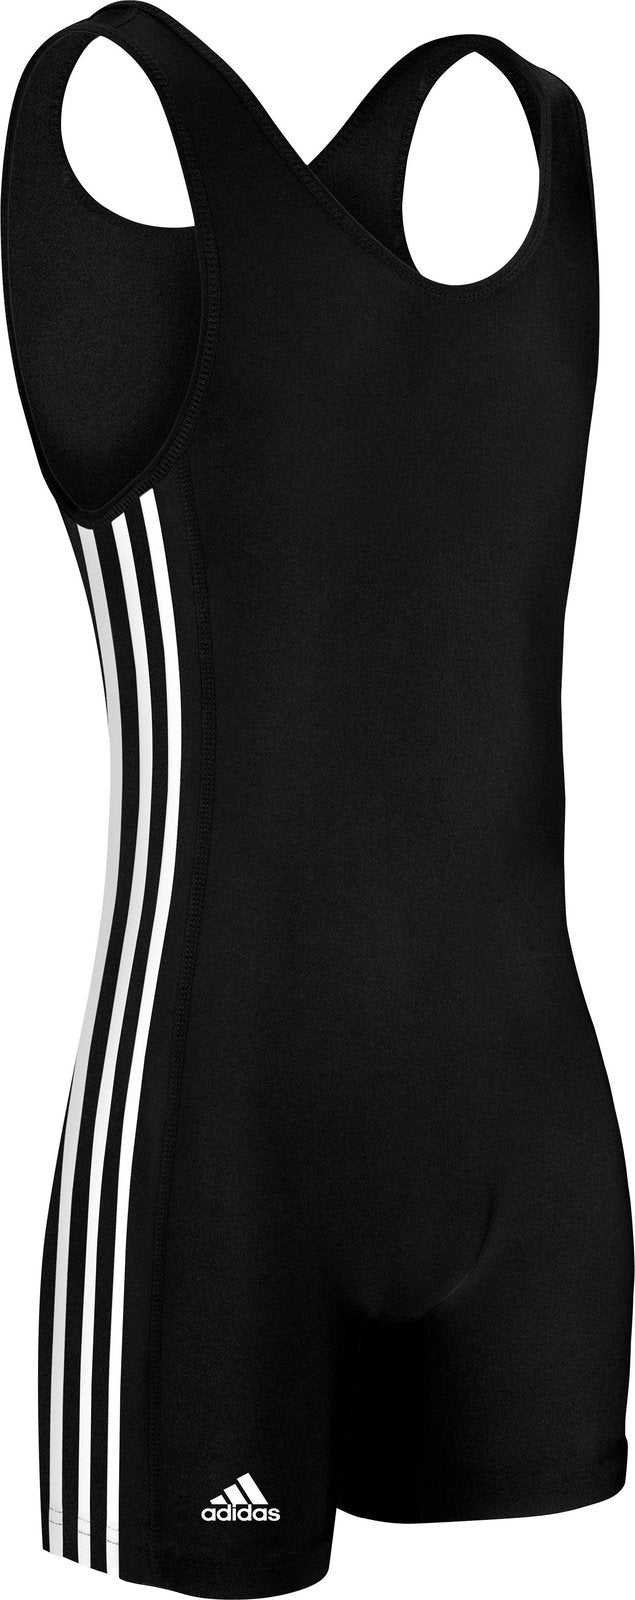 Adidas aS102s 3 Stripe Wrestling Singlet - Black White